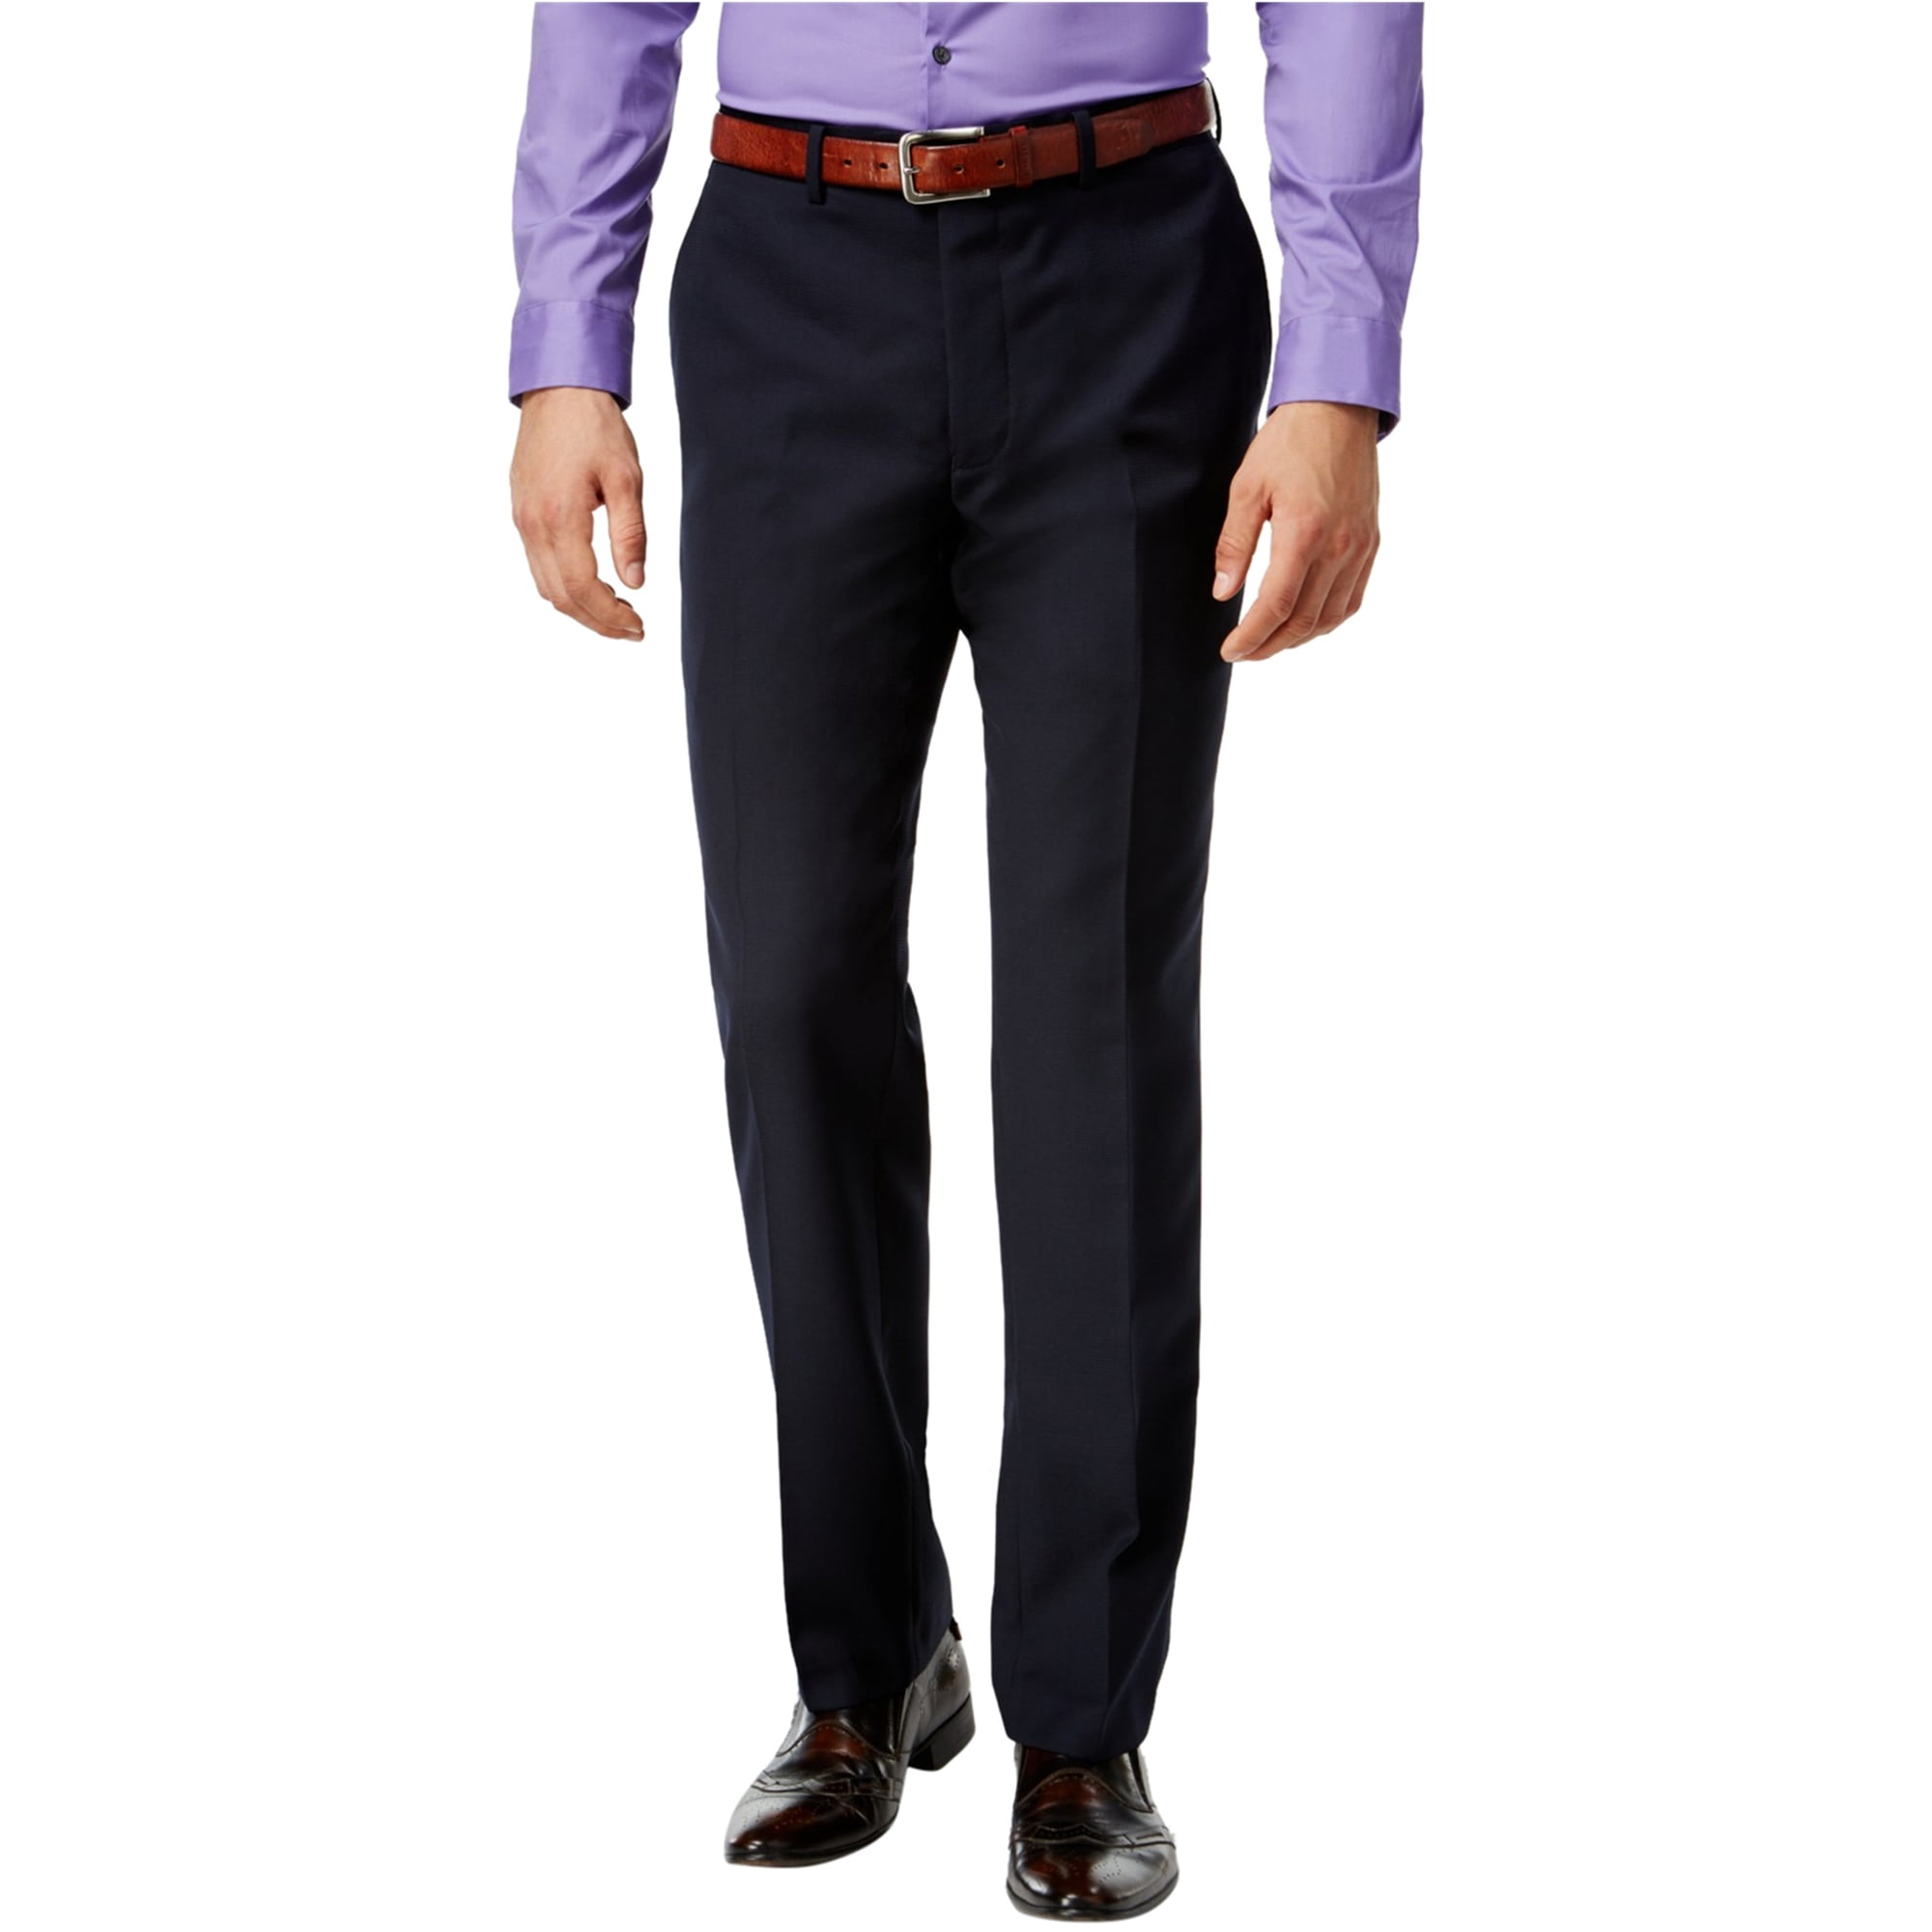 Ben Sherman Mens Wool Blend Dress Pants Slacks, Purple, 34W x UnfinishedL -  Walmart.com